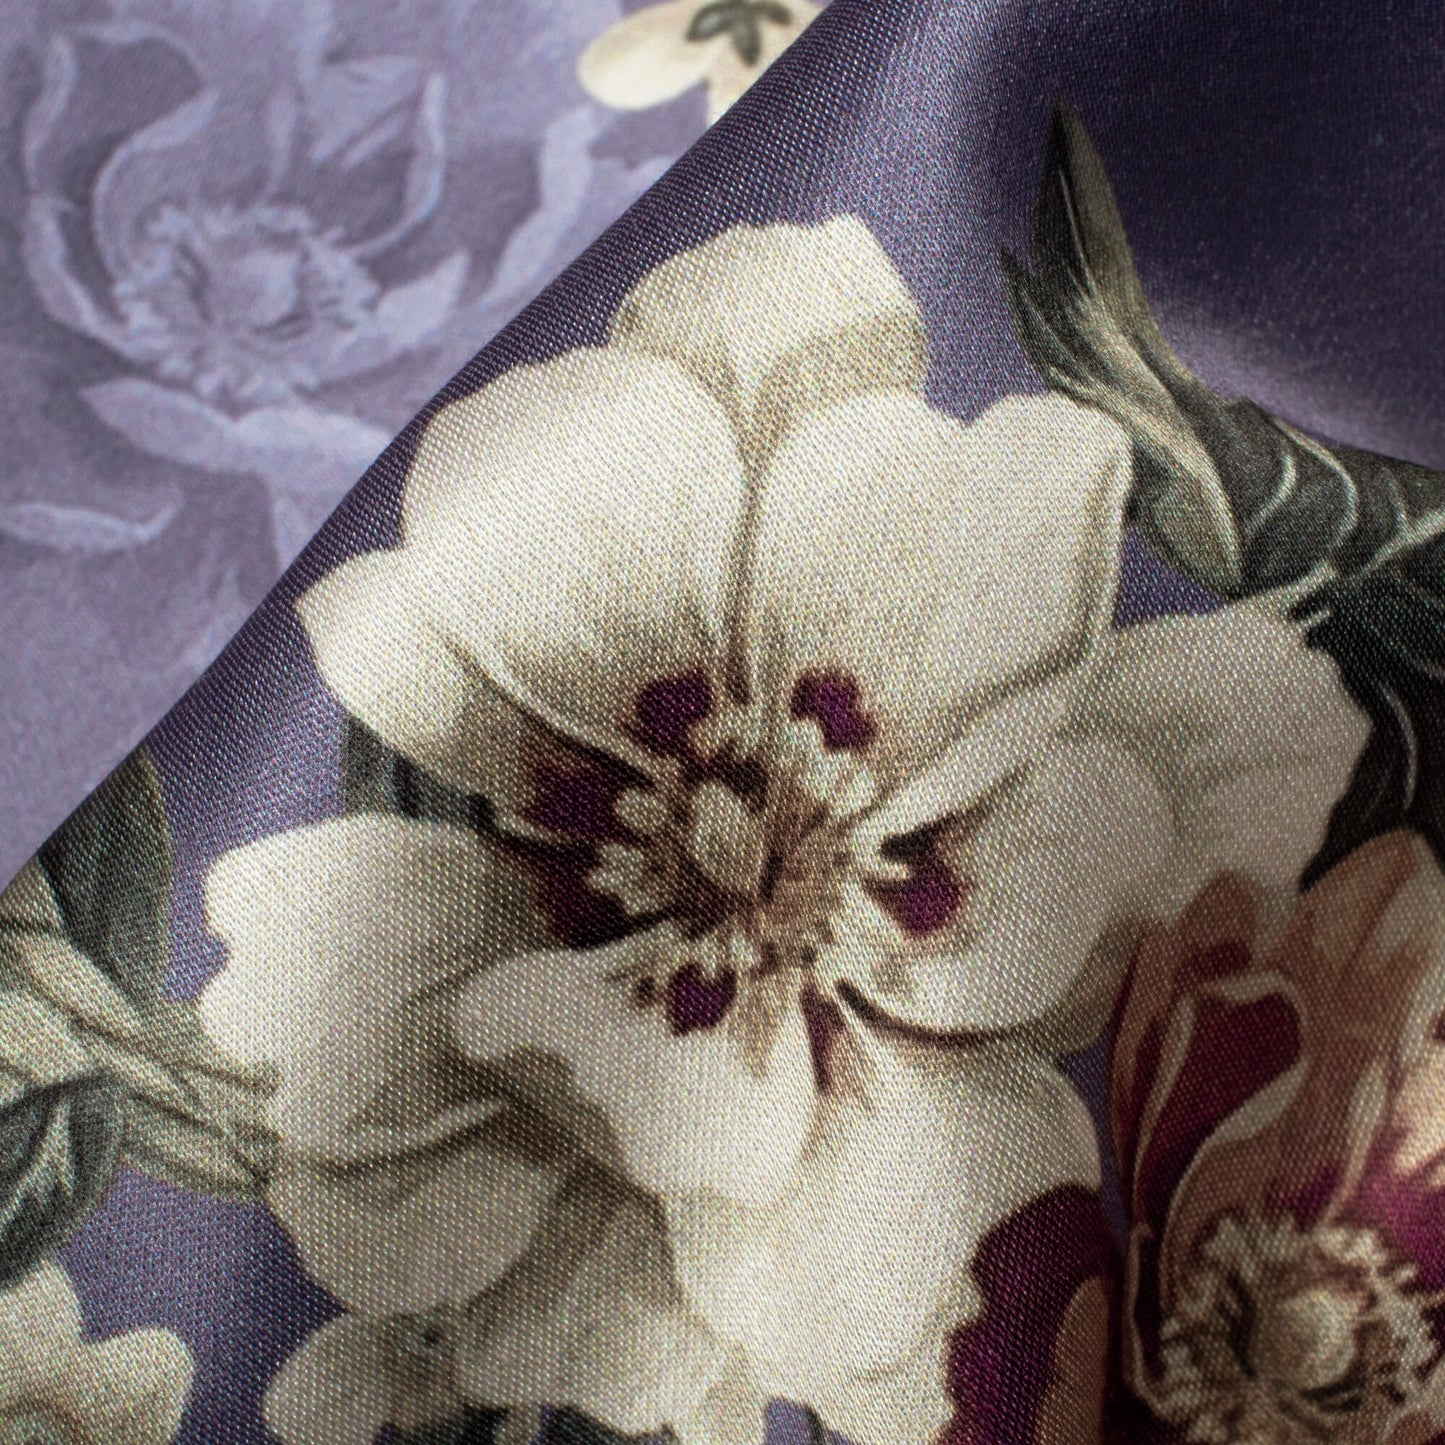 Slate Grey And Cream Floral Pattern Digital Print Premium Lush Satin Fabric